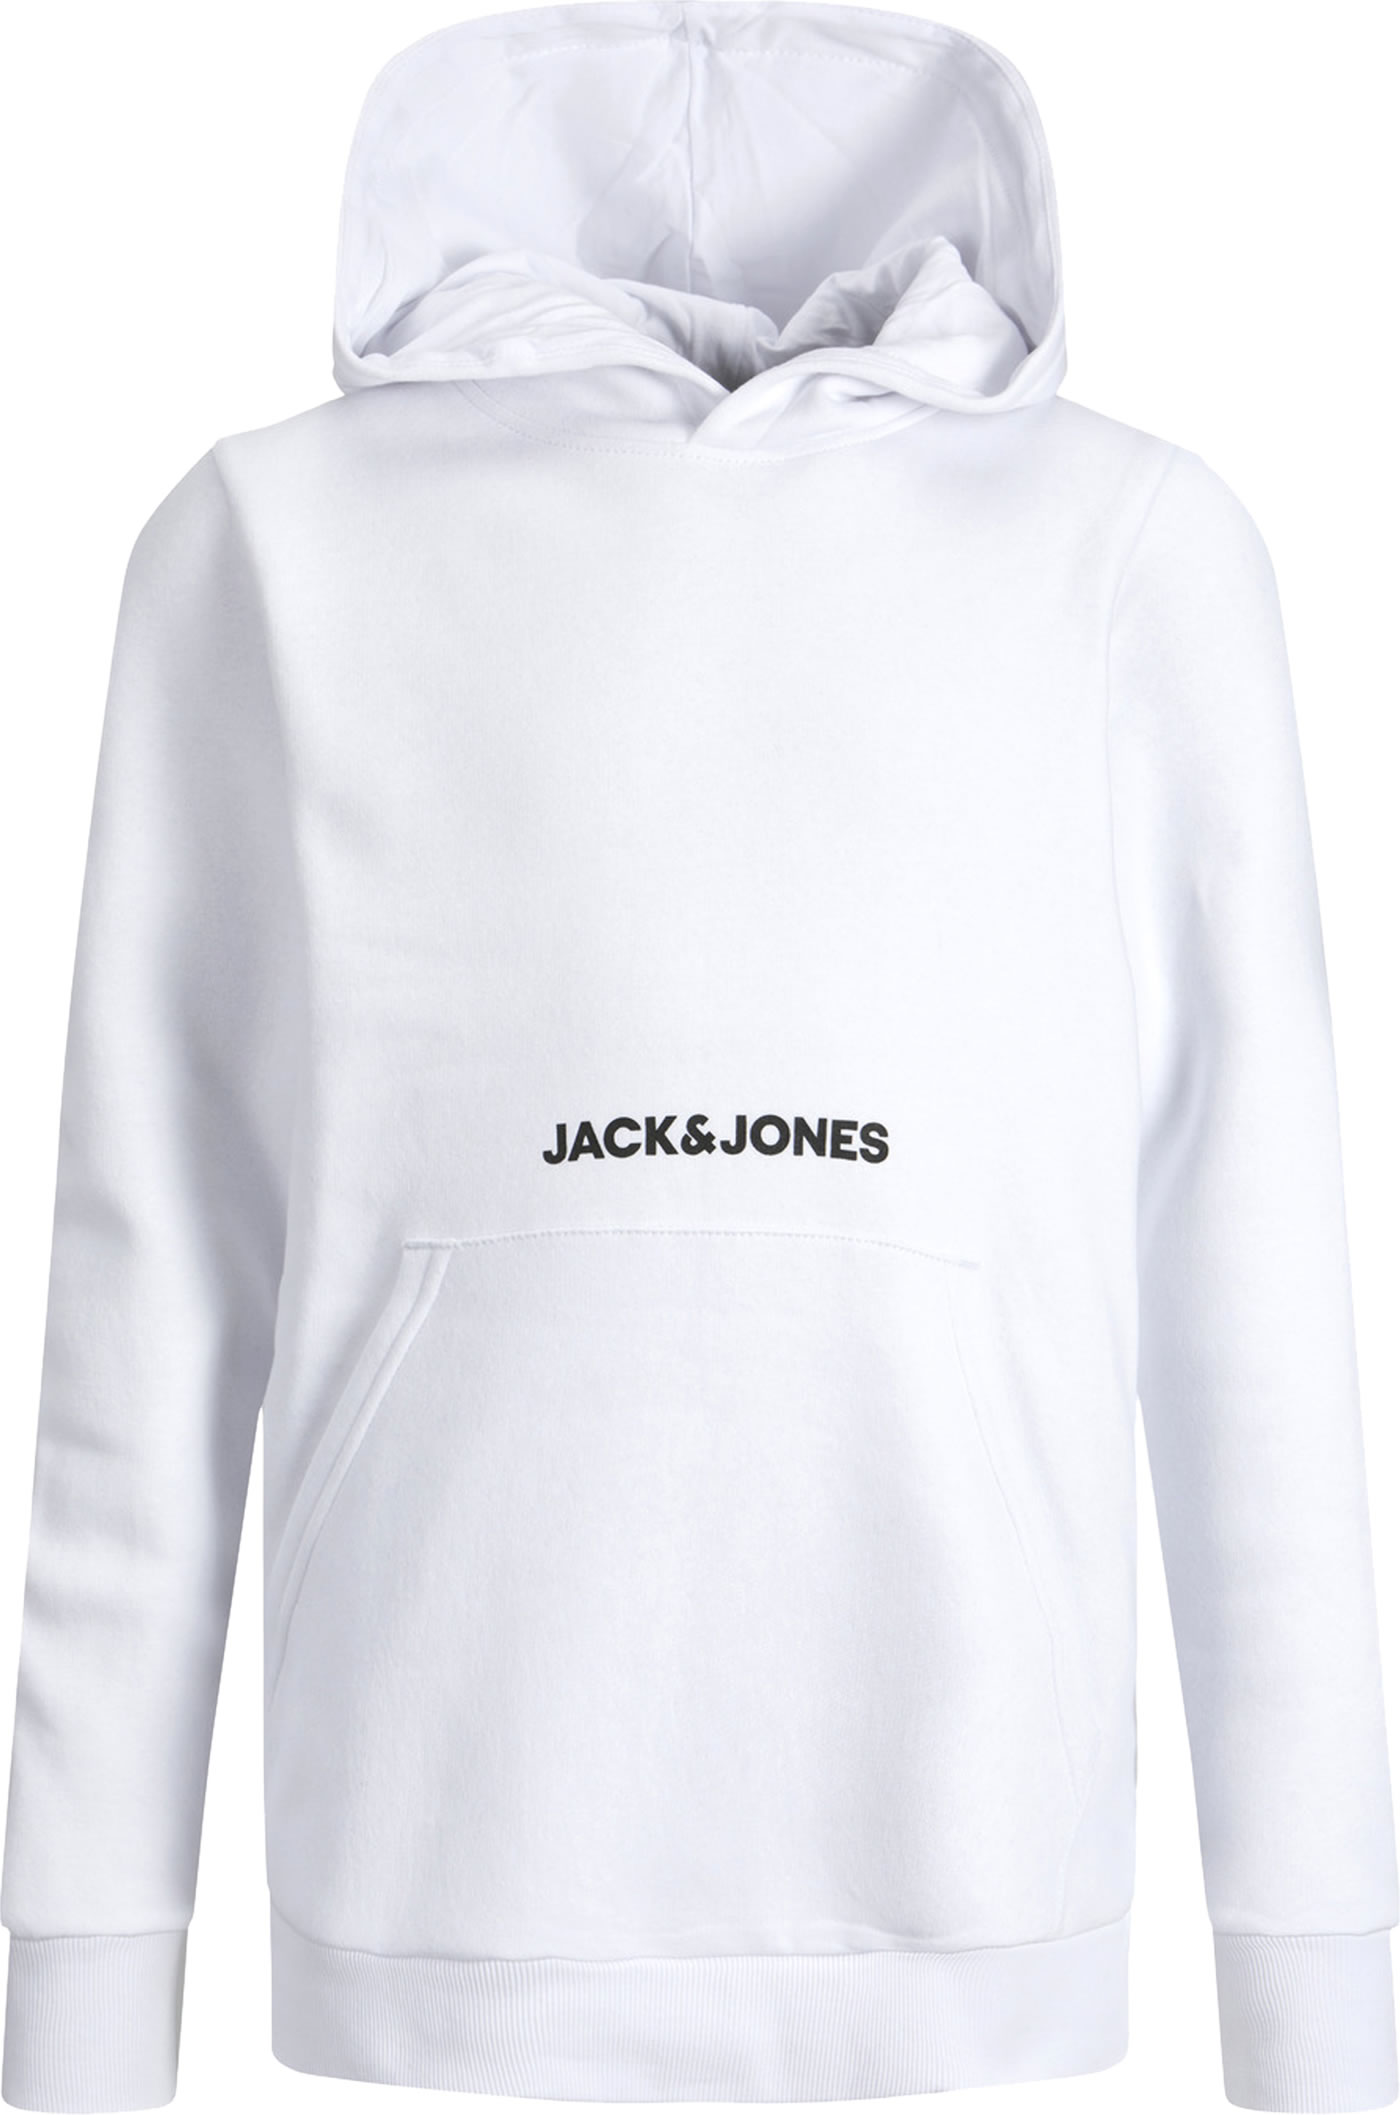 Rabatt 62 % KINDER Pullovers & Sweatshirts Sport Jack & Jones sweatshirt Grau 152 